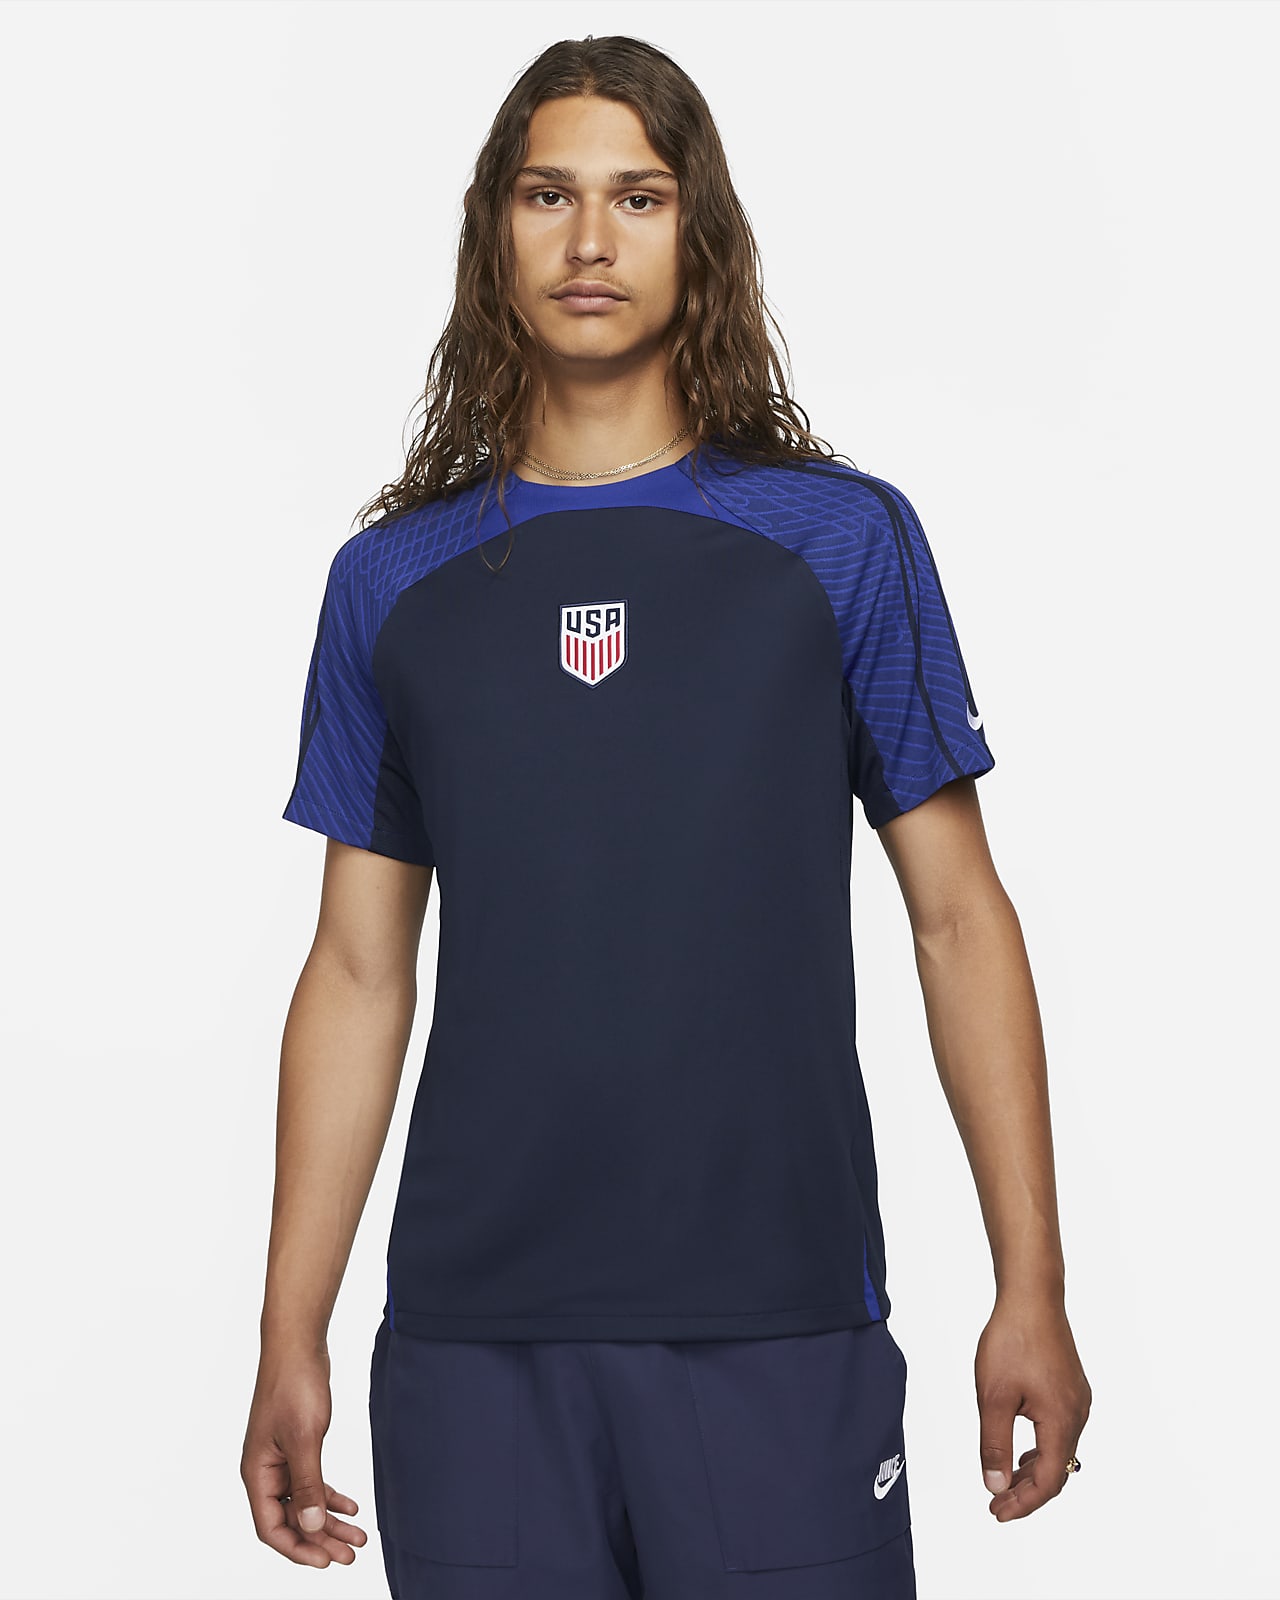 U.S. Strike Men's Nike Dri-FIT Short-Sleeve Soccer Top